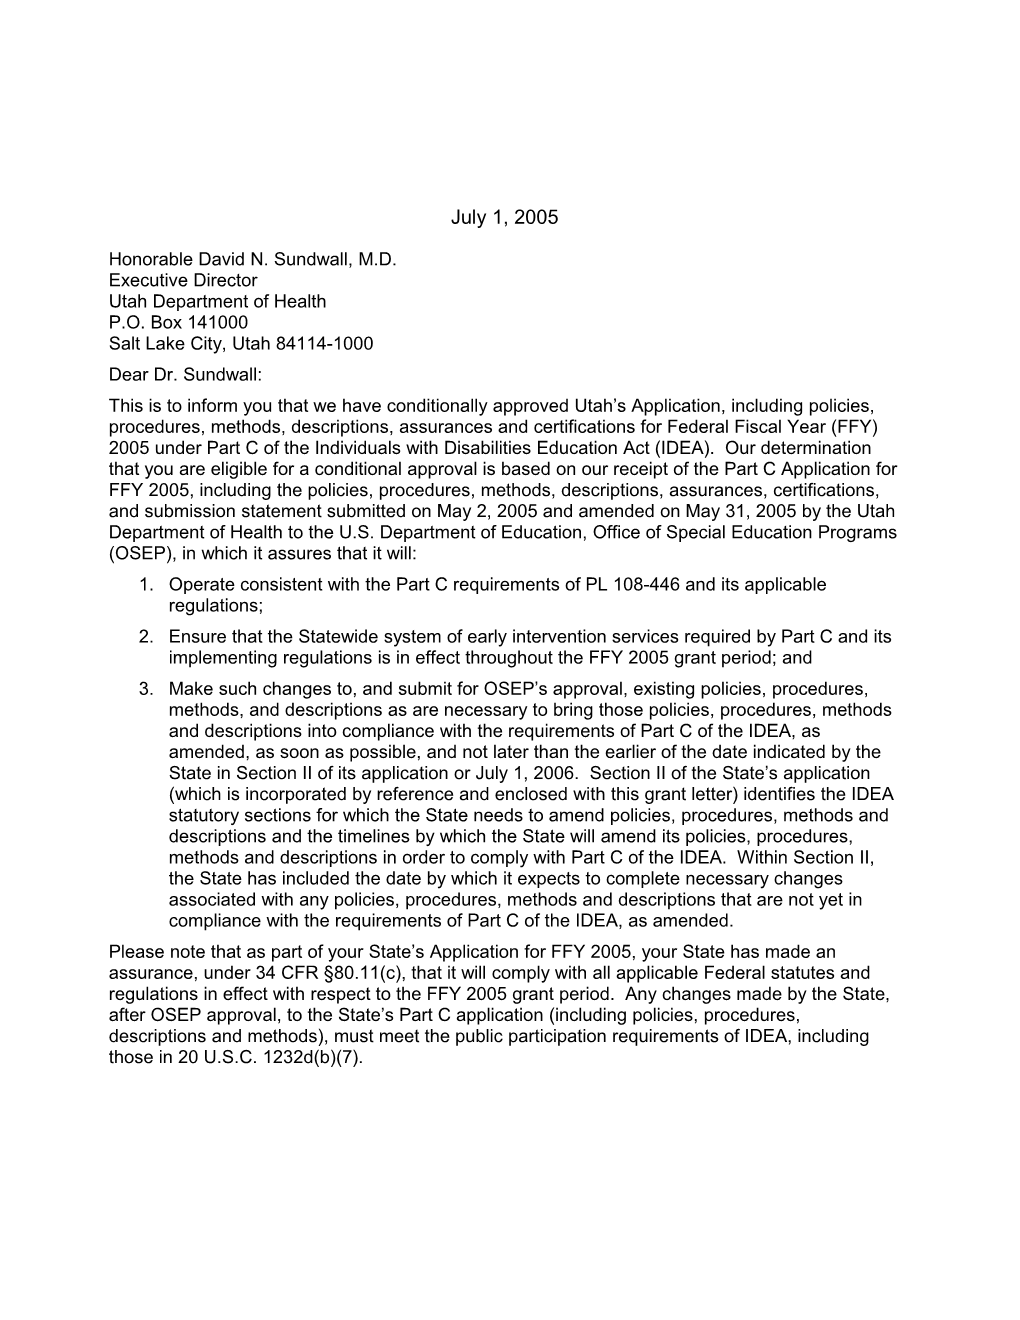 Utah Part C 2005 Grant Award Letter (Msword)